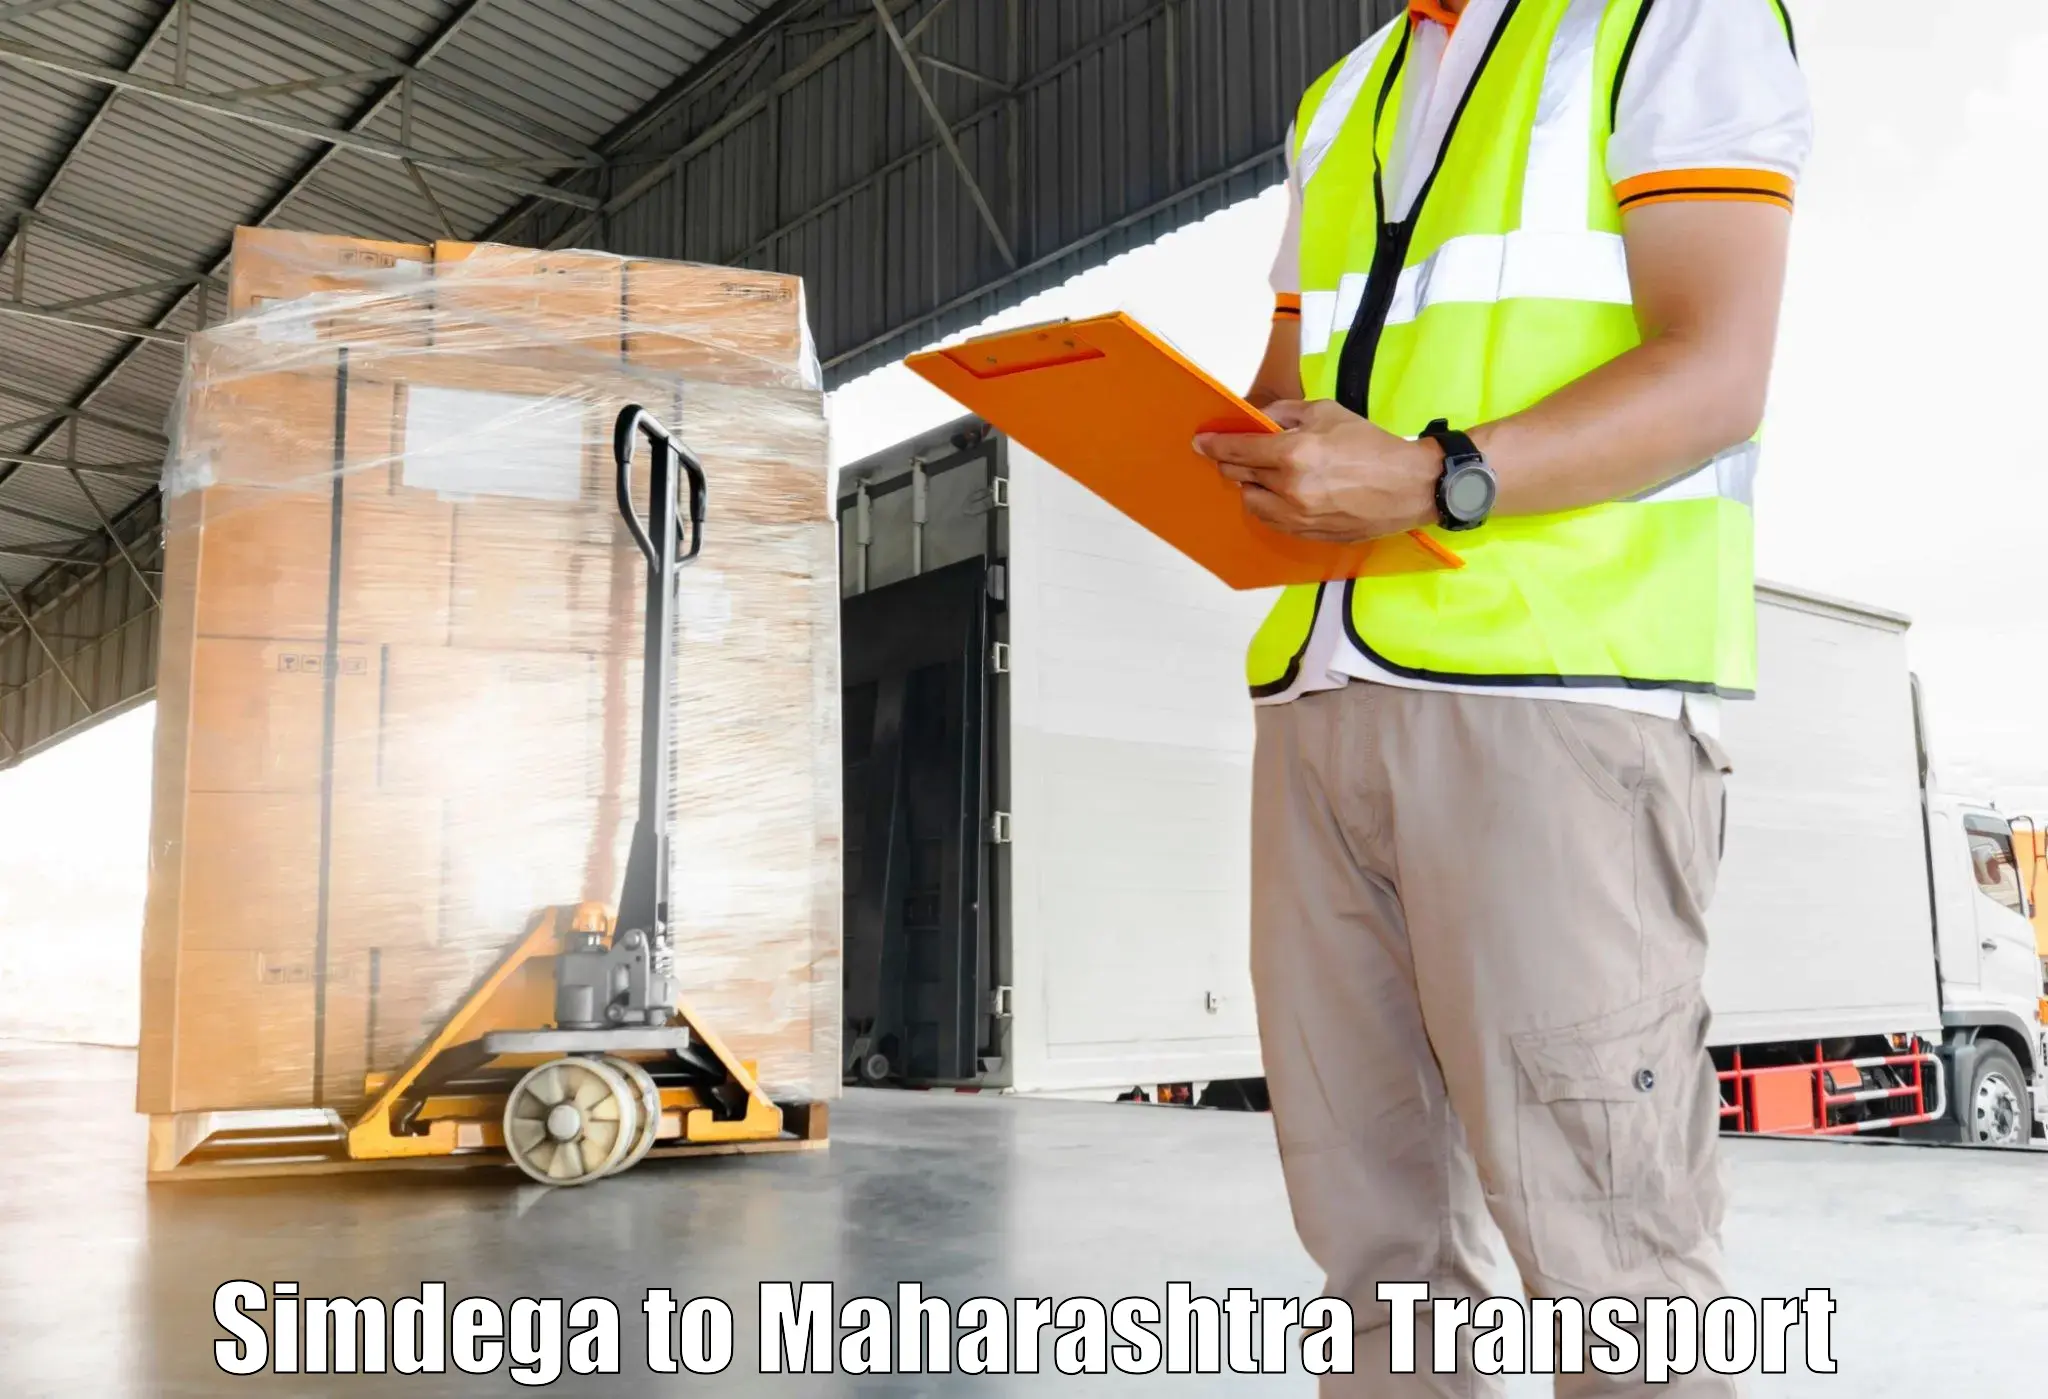 Truck transport companies in India Simdega to Kolhapur